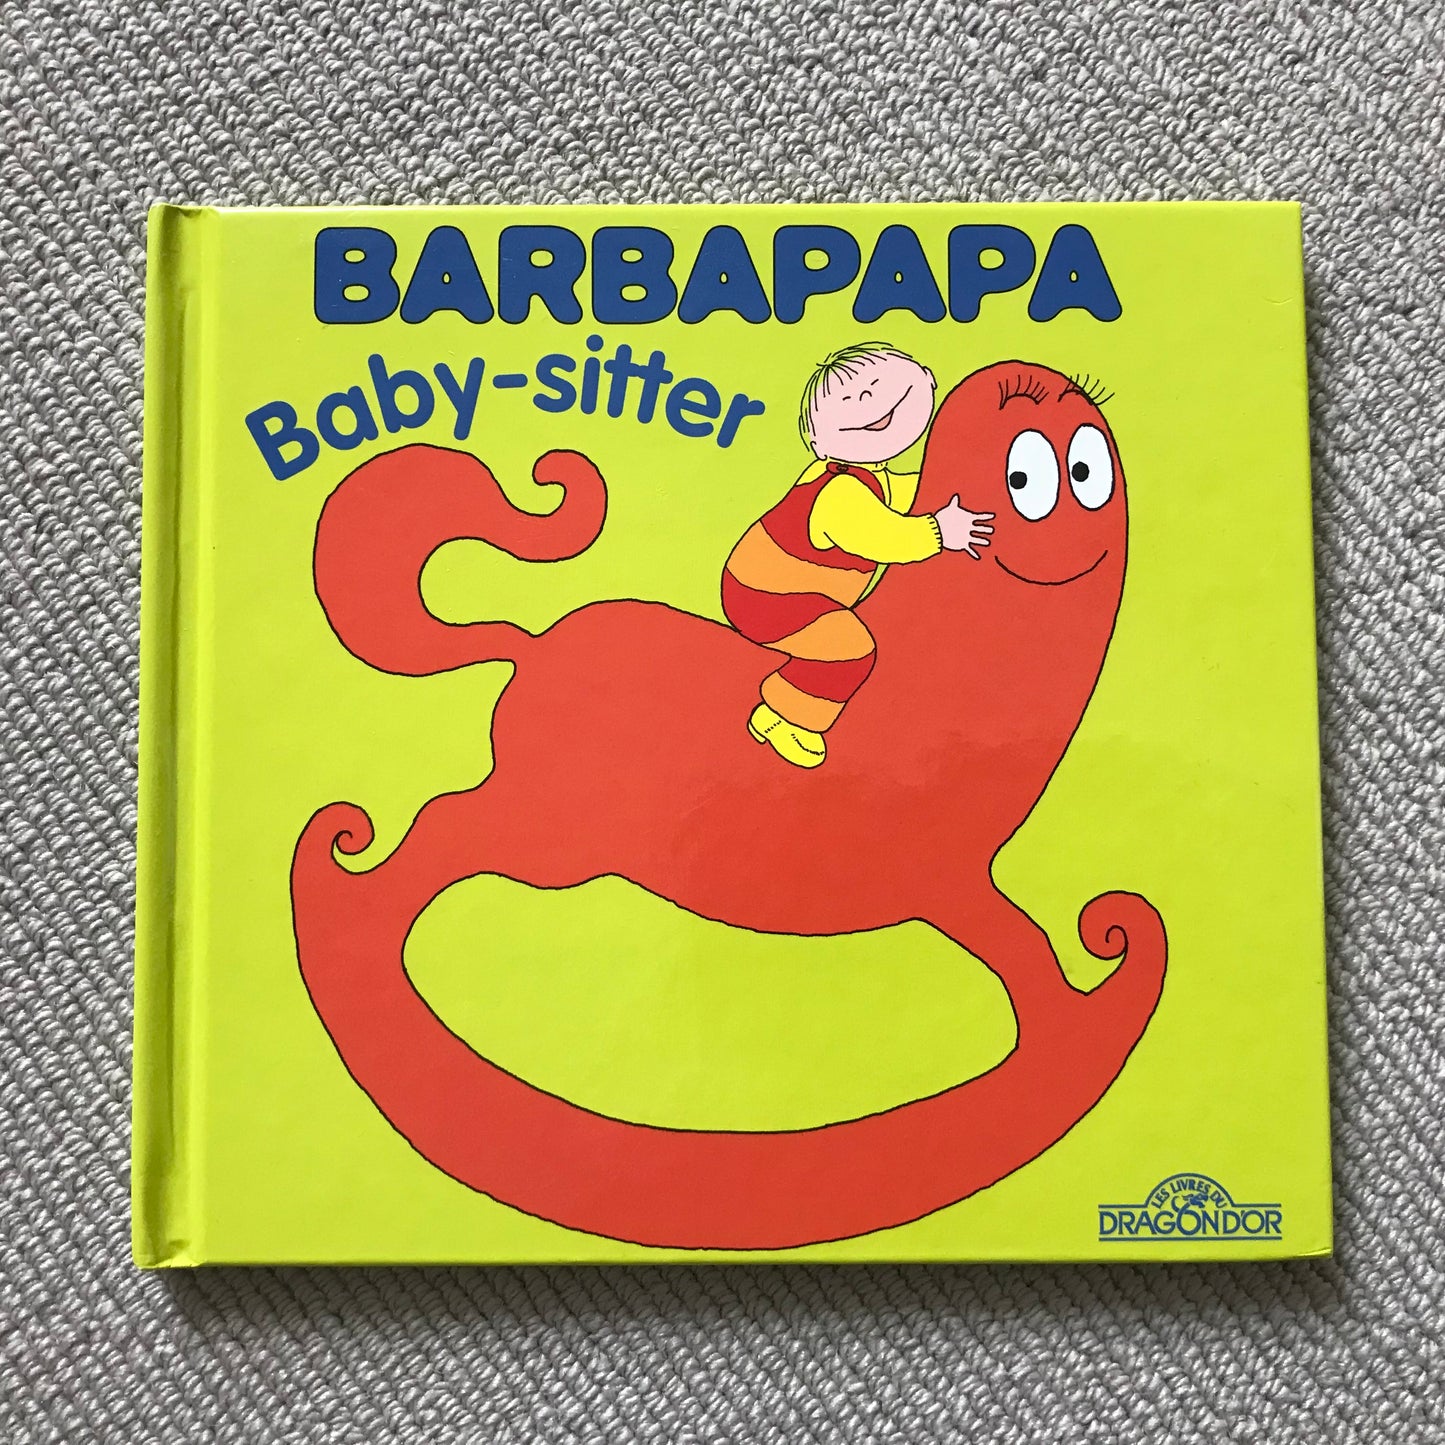 Barbapapa, baby-sitter - A. Tison & T. Taylor